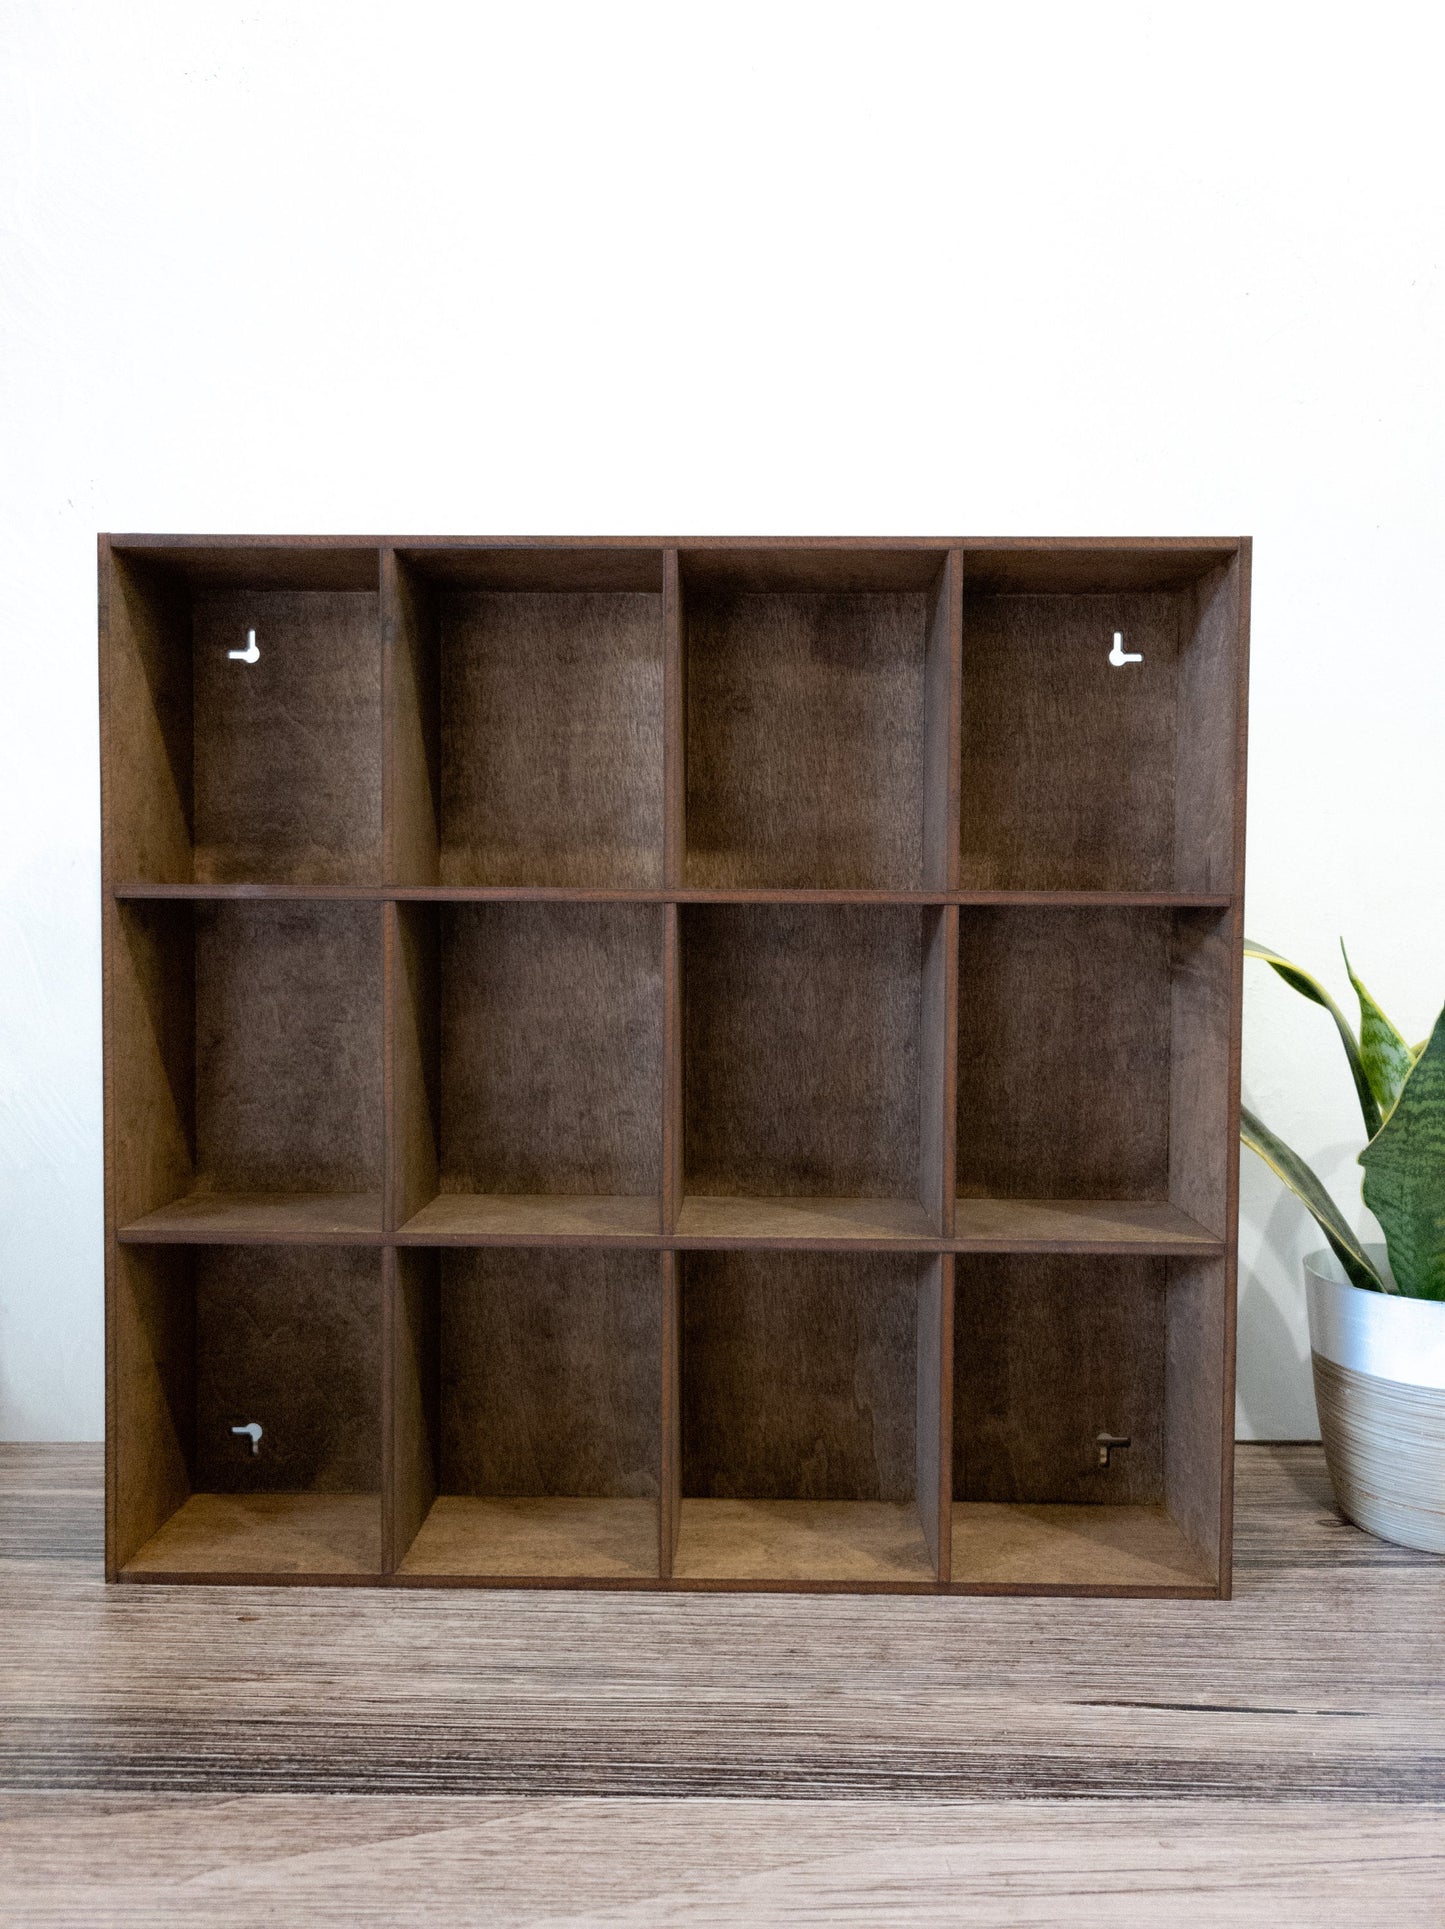 12 Compartment Wooden Display Shelf- Trinket ShelfCurio Cabinet- Knick Knack Collection Display - Printer Tray -Figure Organizer Display